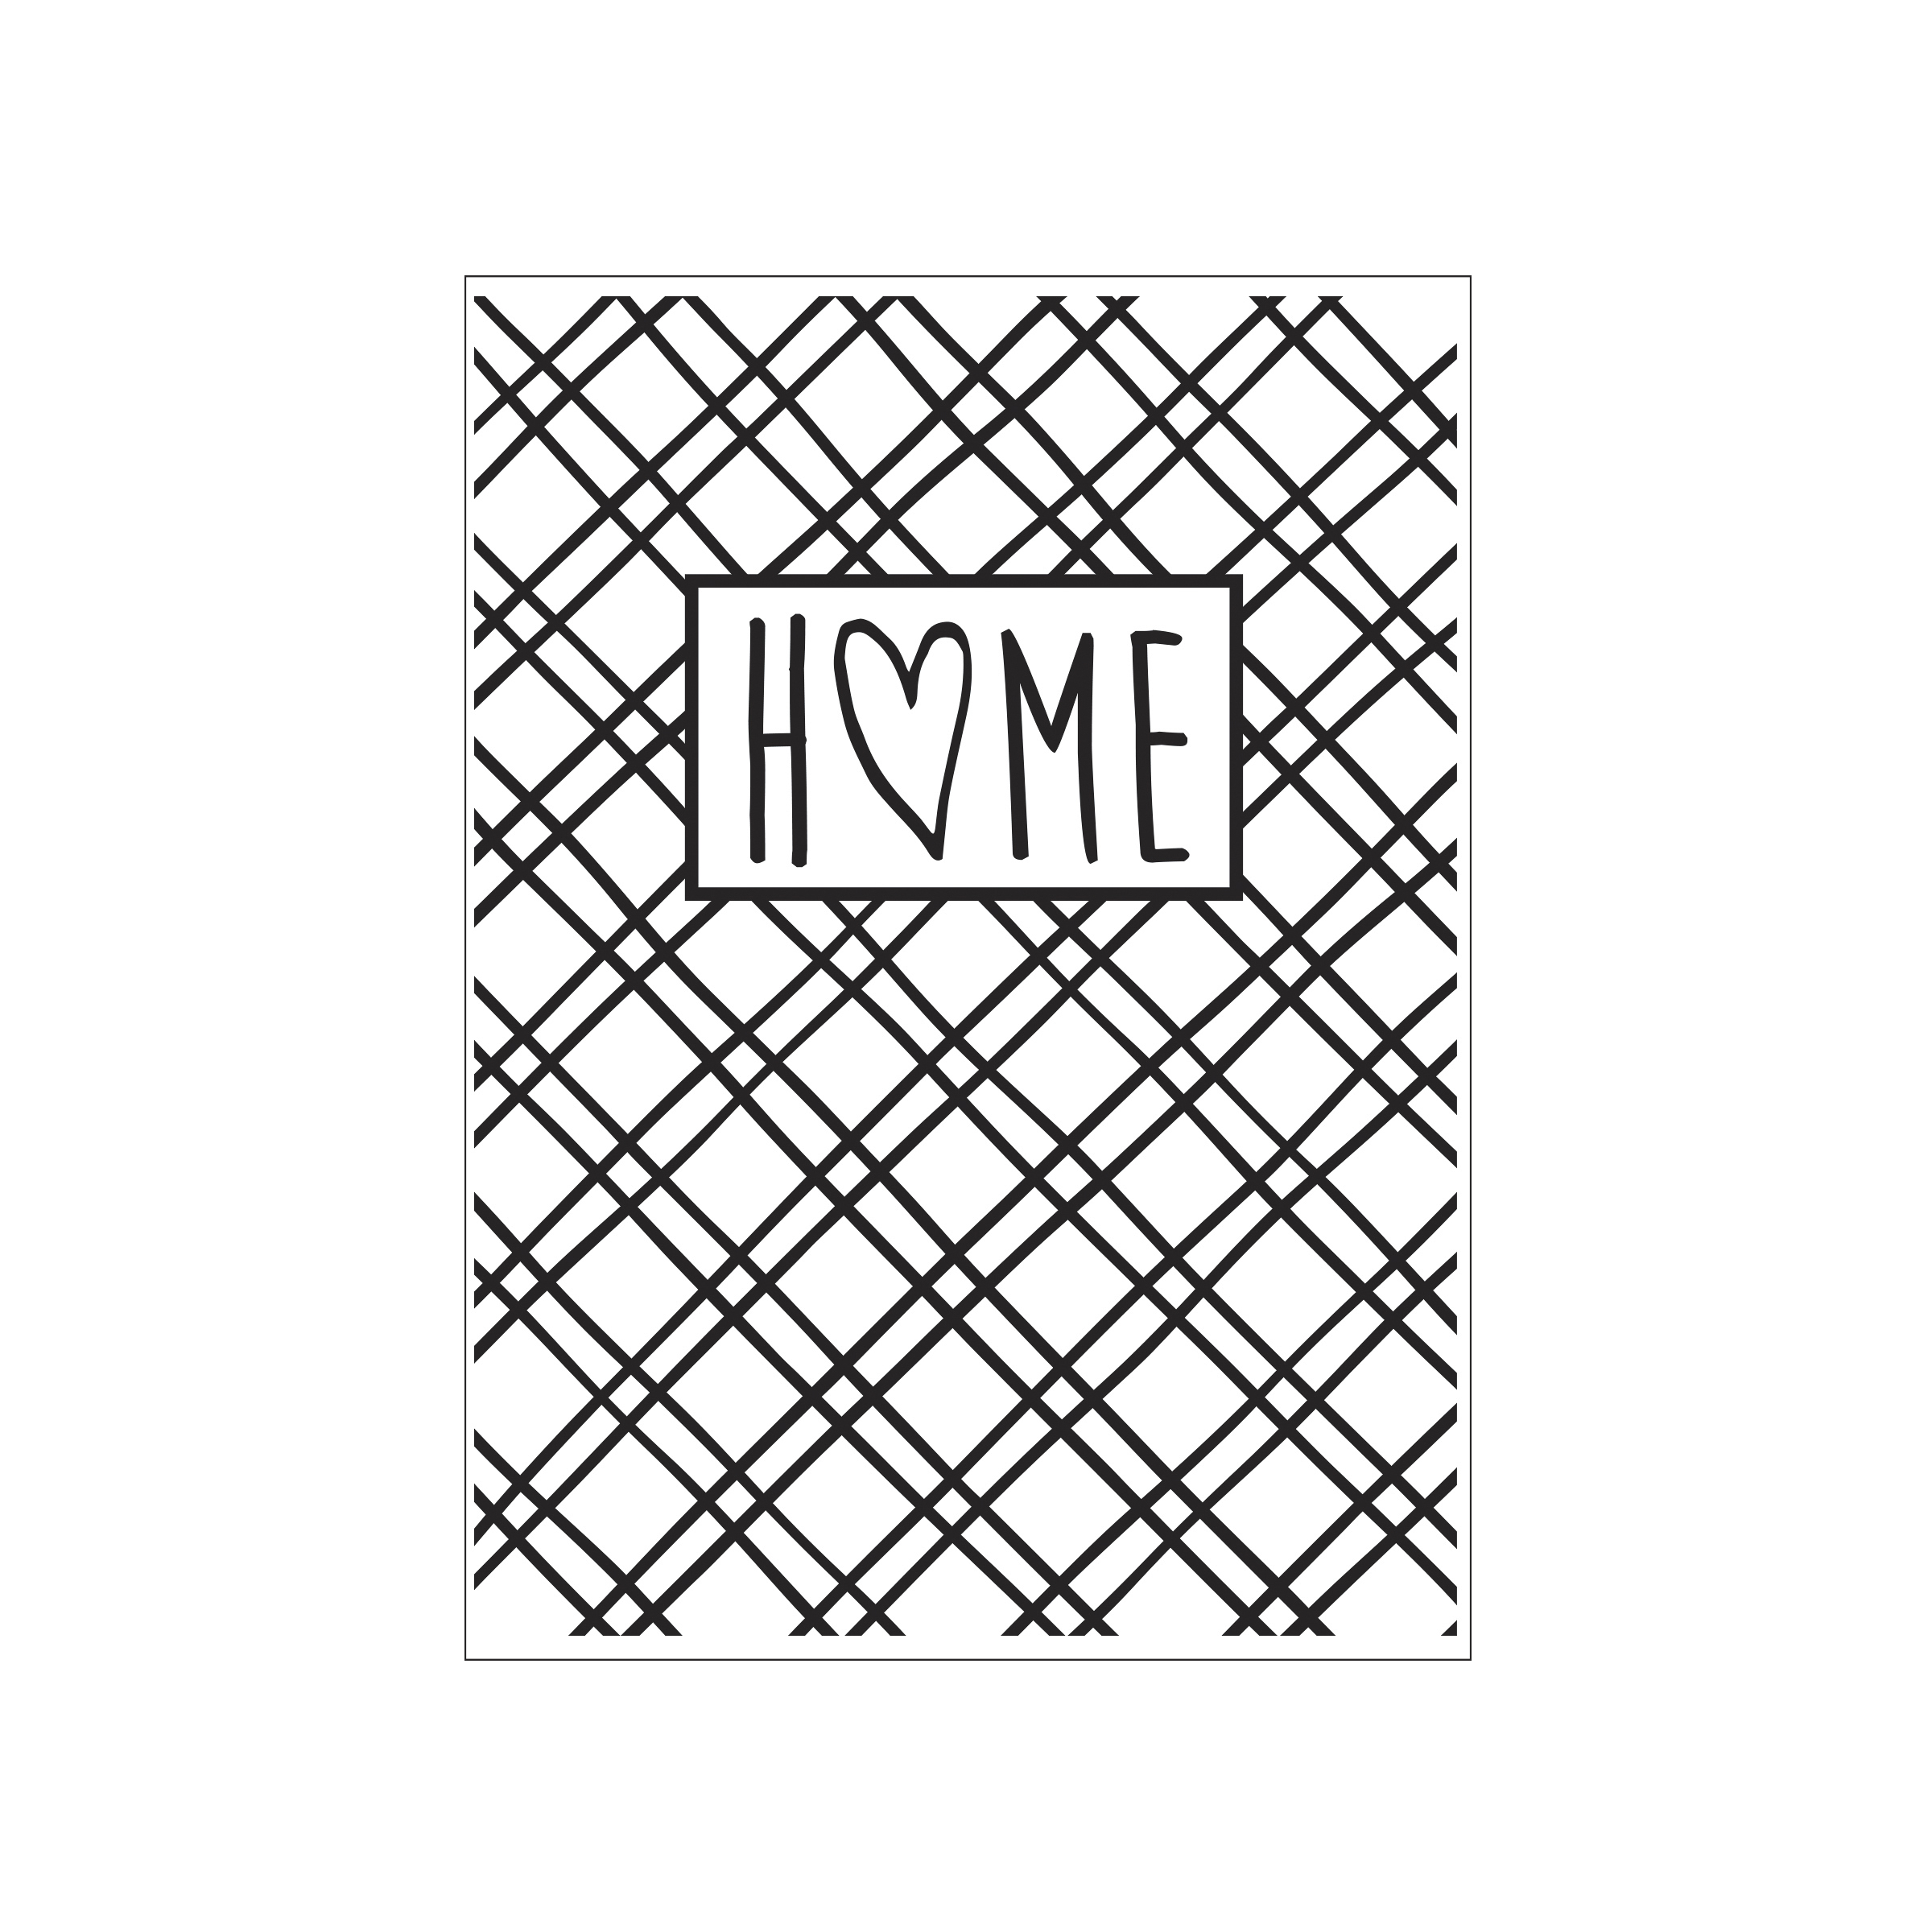 Darice • Embossing folder Home with diagonal pattern